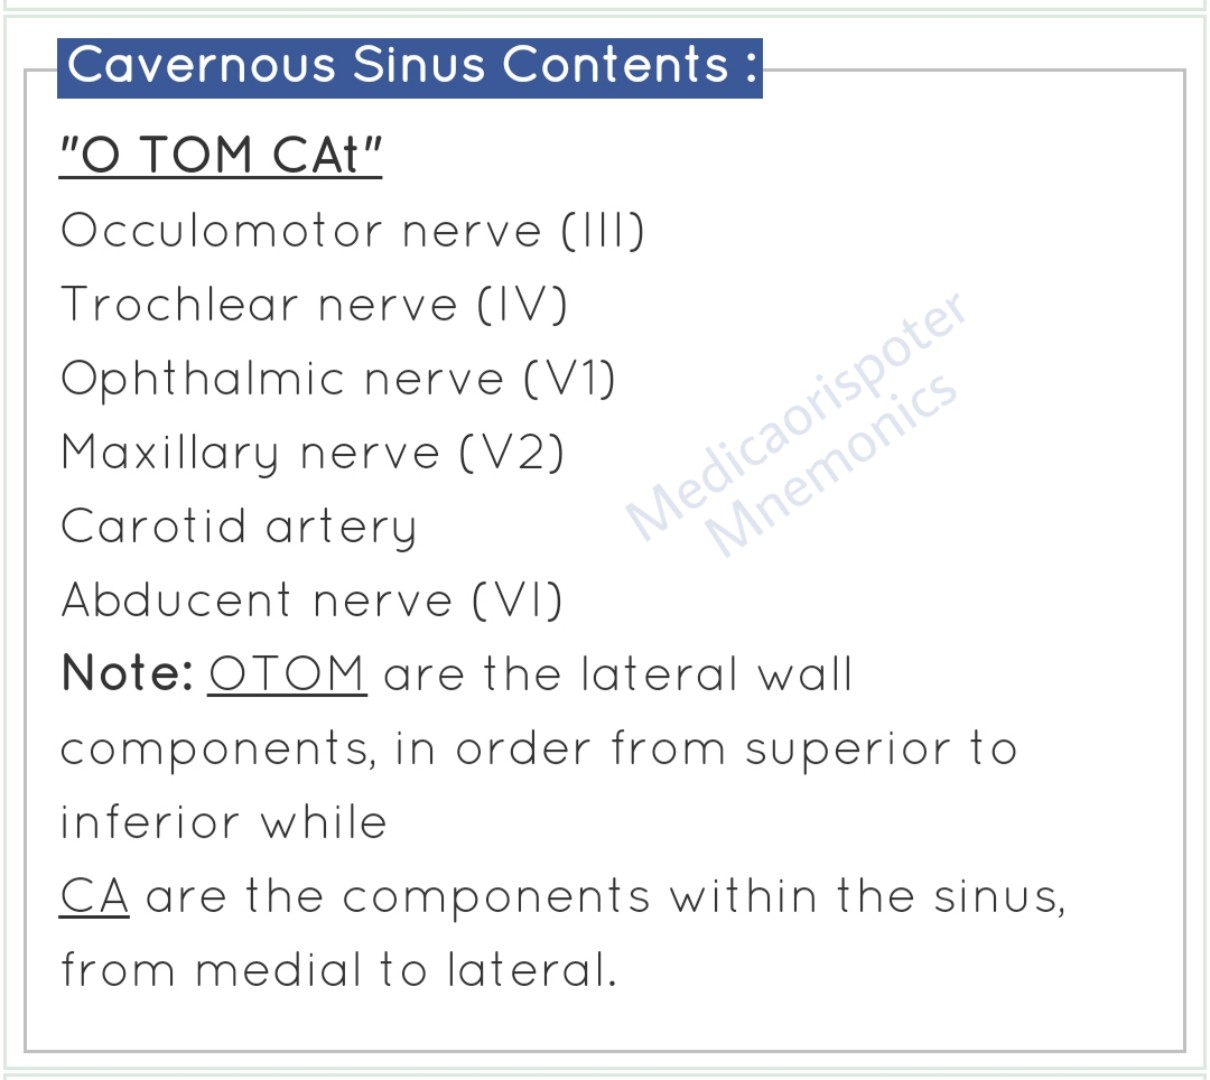 Contents_of_Cavernous_Sinus